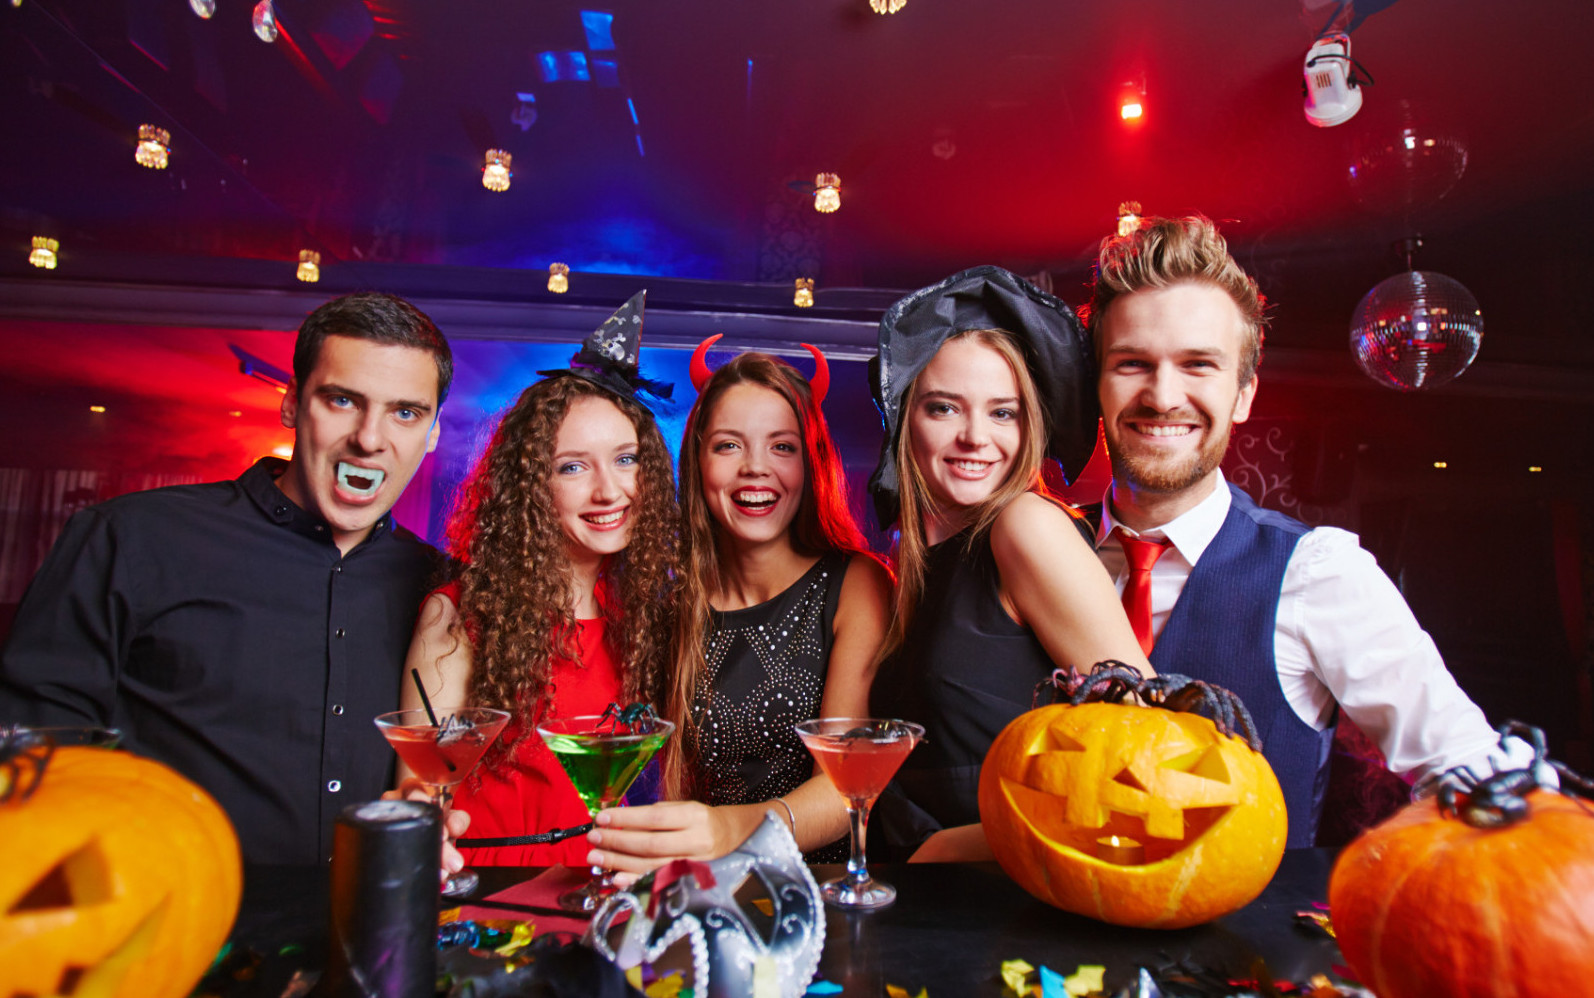 Организация вечеринки на Хэллоуин, хэллоуинская вечеринка идеи, идеи для вечеринки на Хэллоуин, игры на Хэллоуин, развлечения на Хэллоуин 